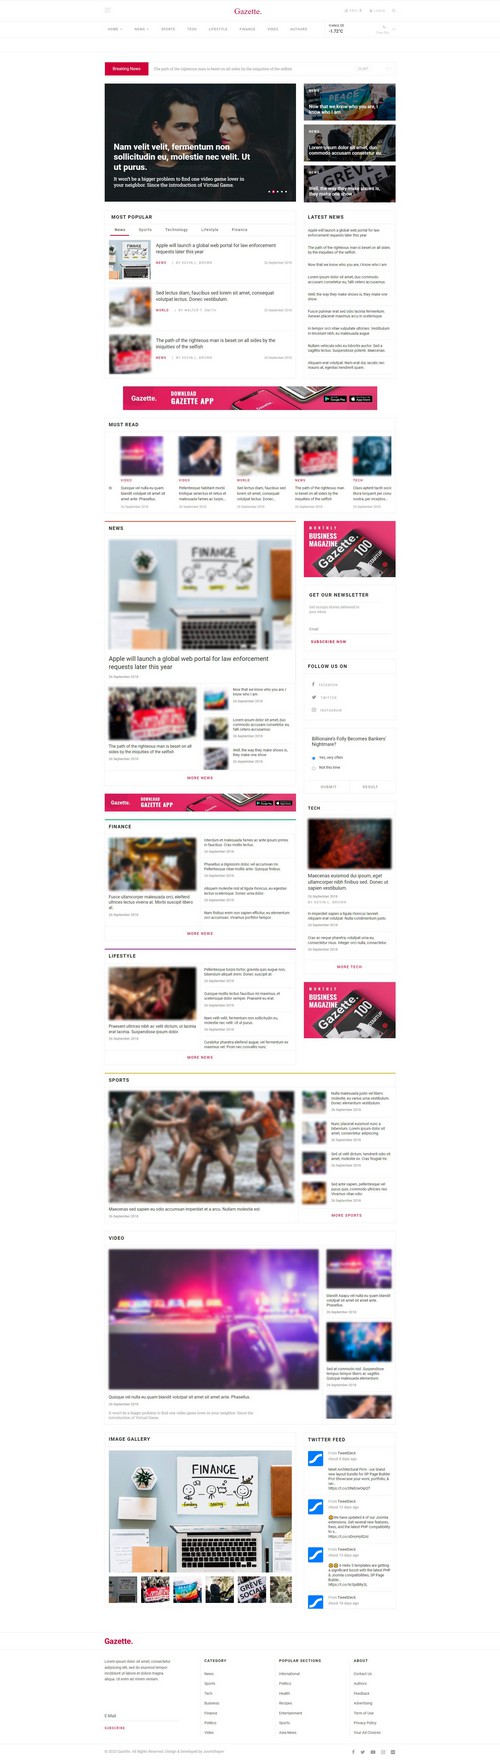 Gazette - News, Magazine, and Blog Joomla Template